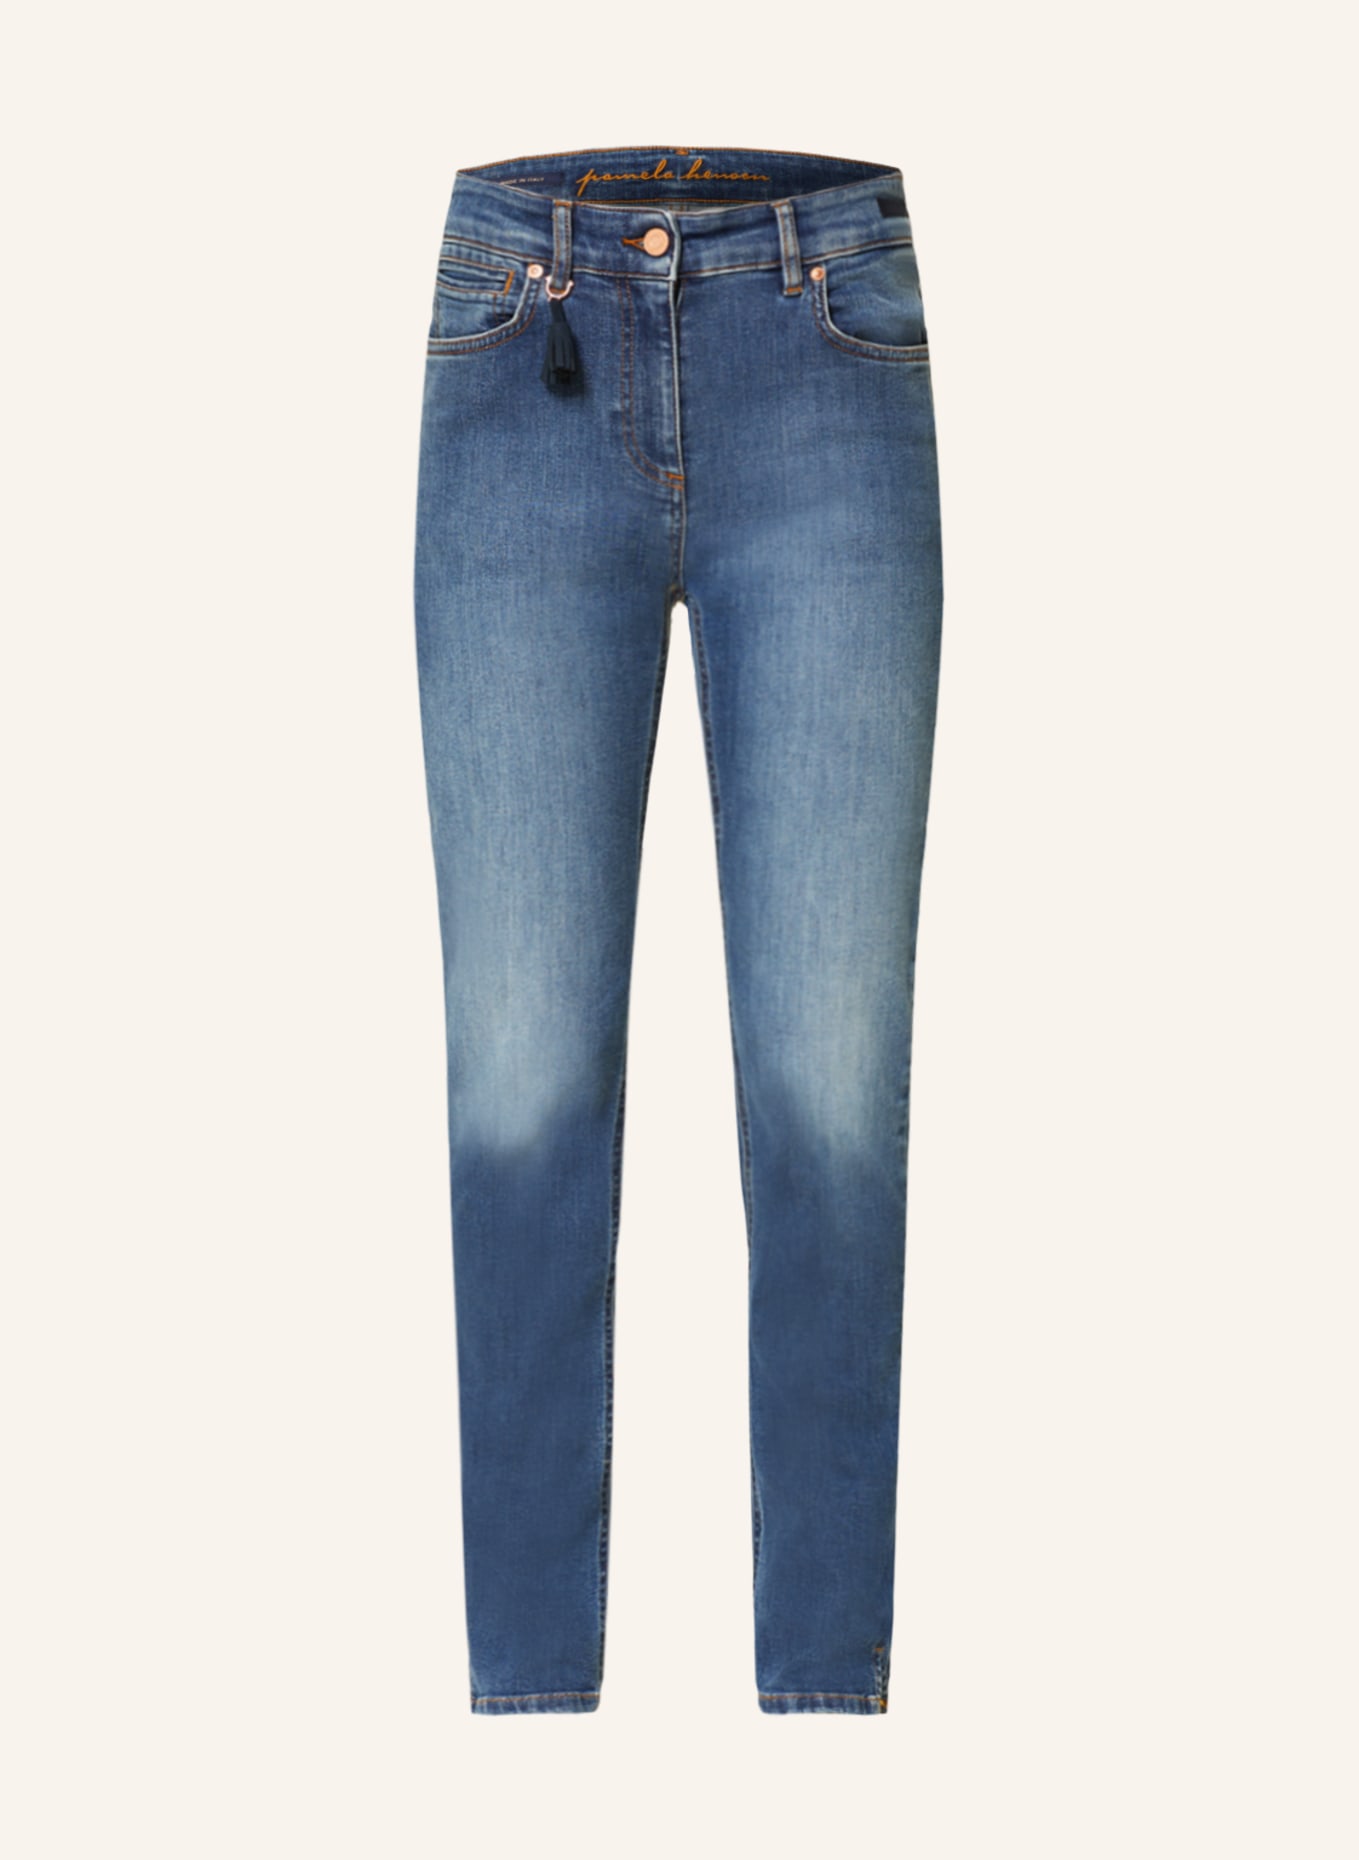 pamela henson Jeans, Farbe: LAW light authentic blau denim (Bild 1)